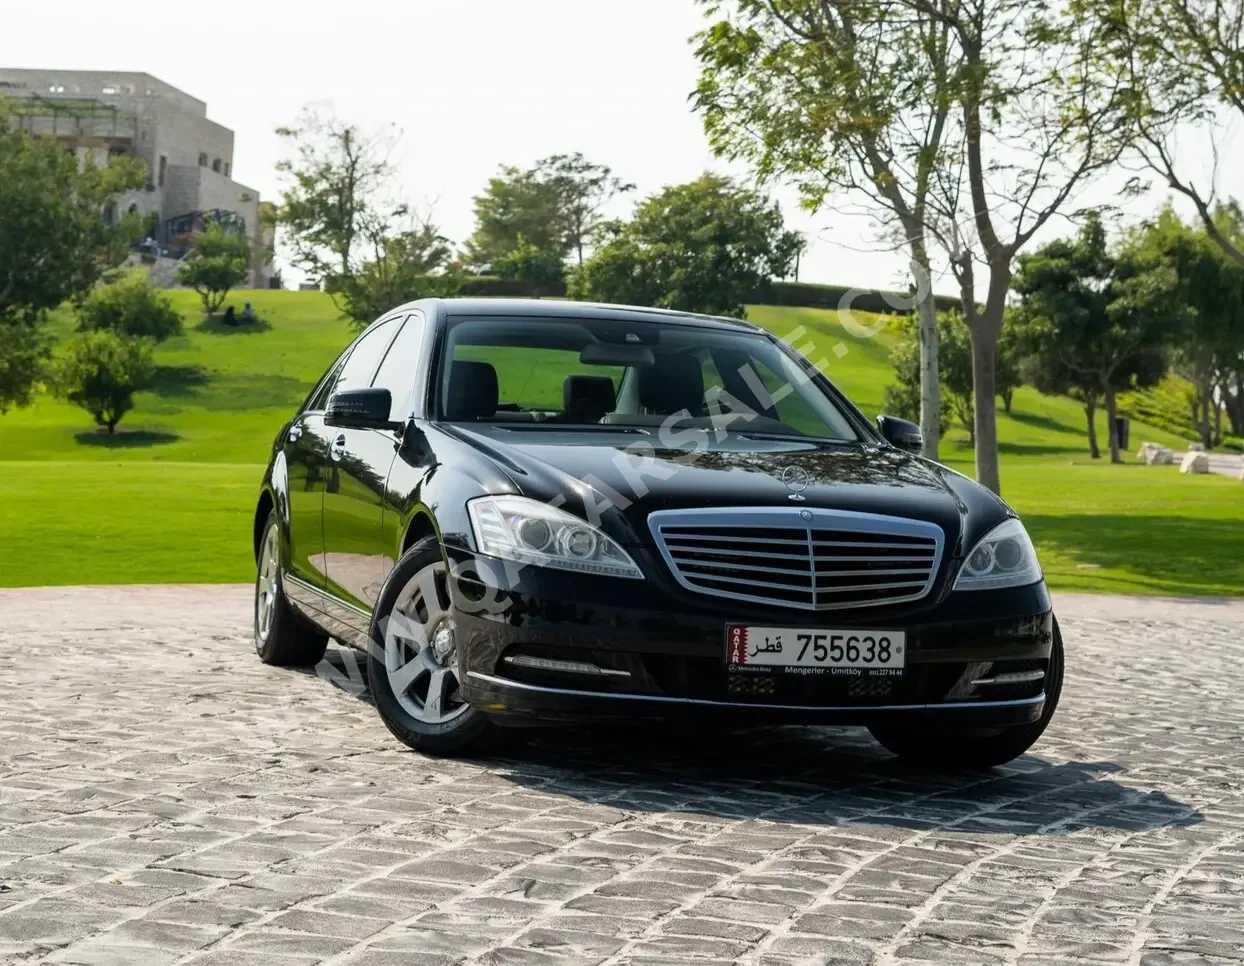 Mercedes-Benz  S-Class  350  2012  Automatic  50,000 Km  6 Cylinder  Rear Wheel Drive (RWD)  Sedan  Black